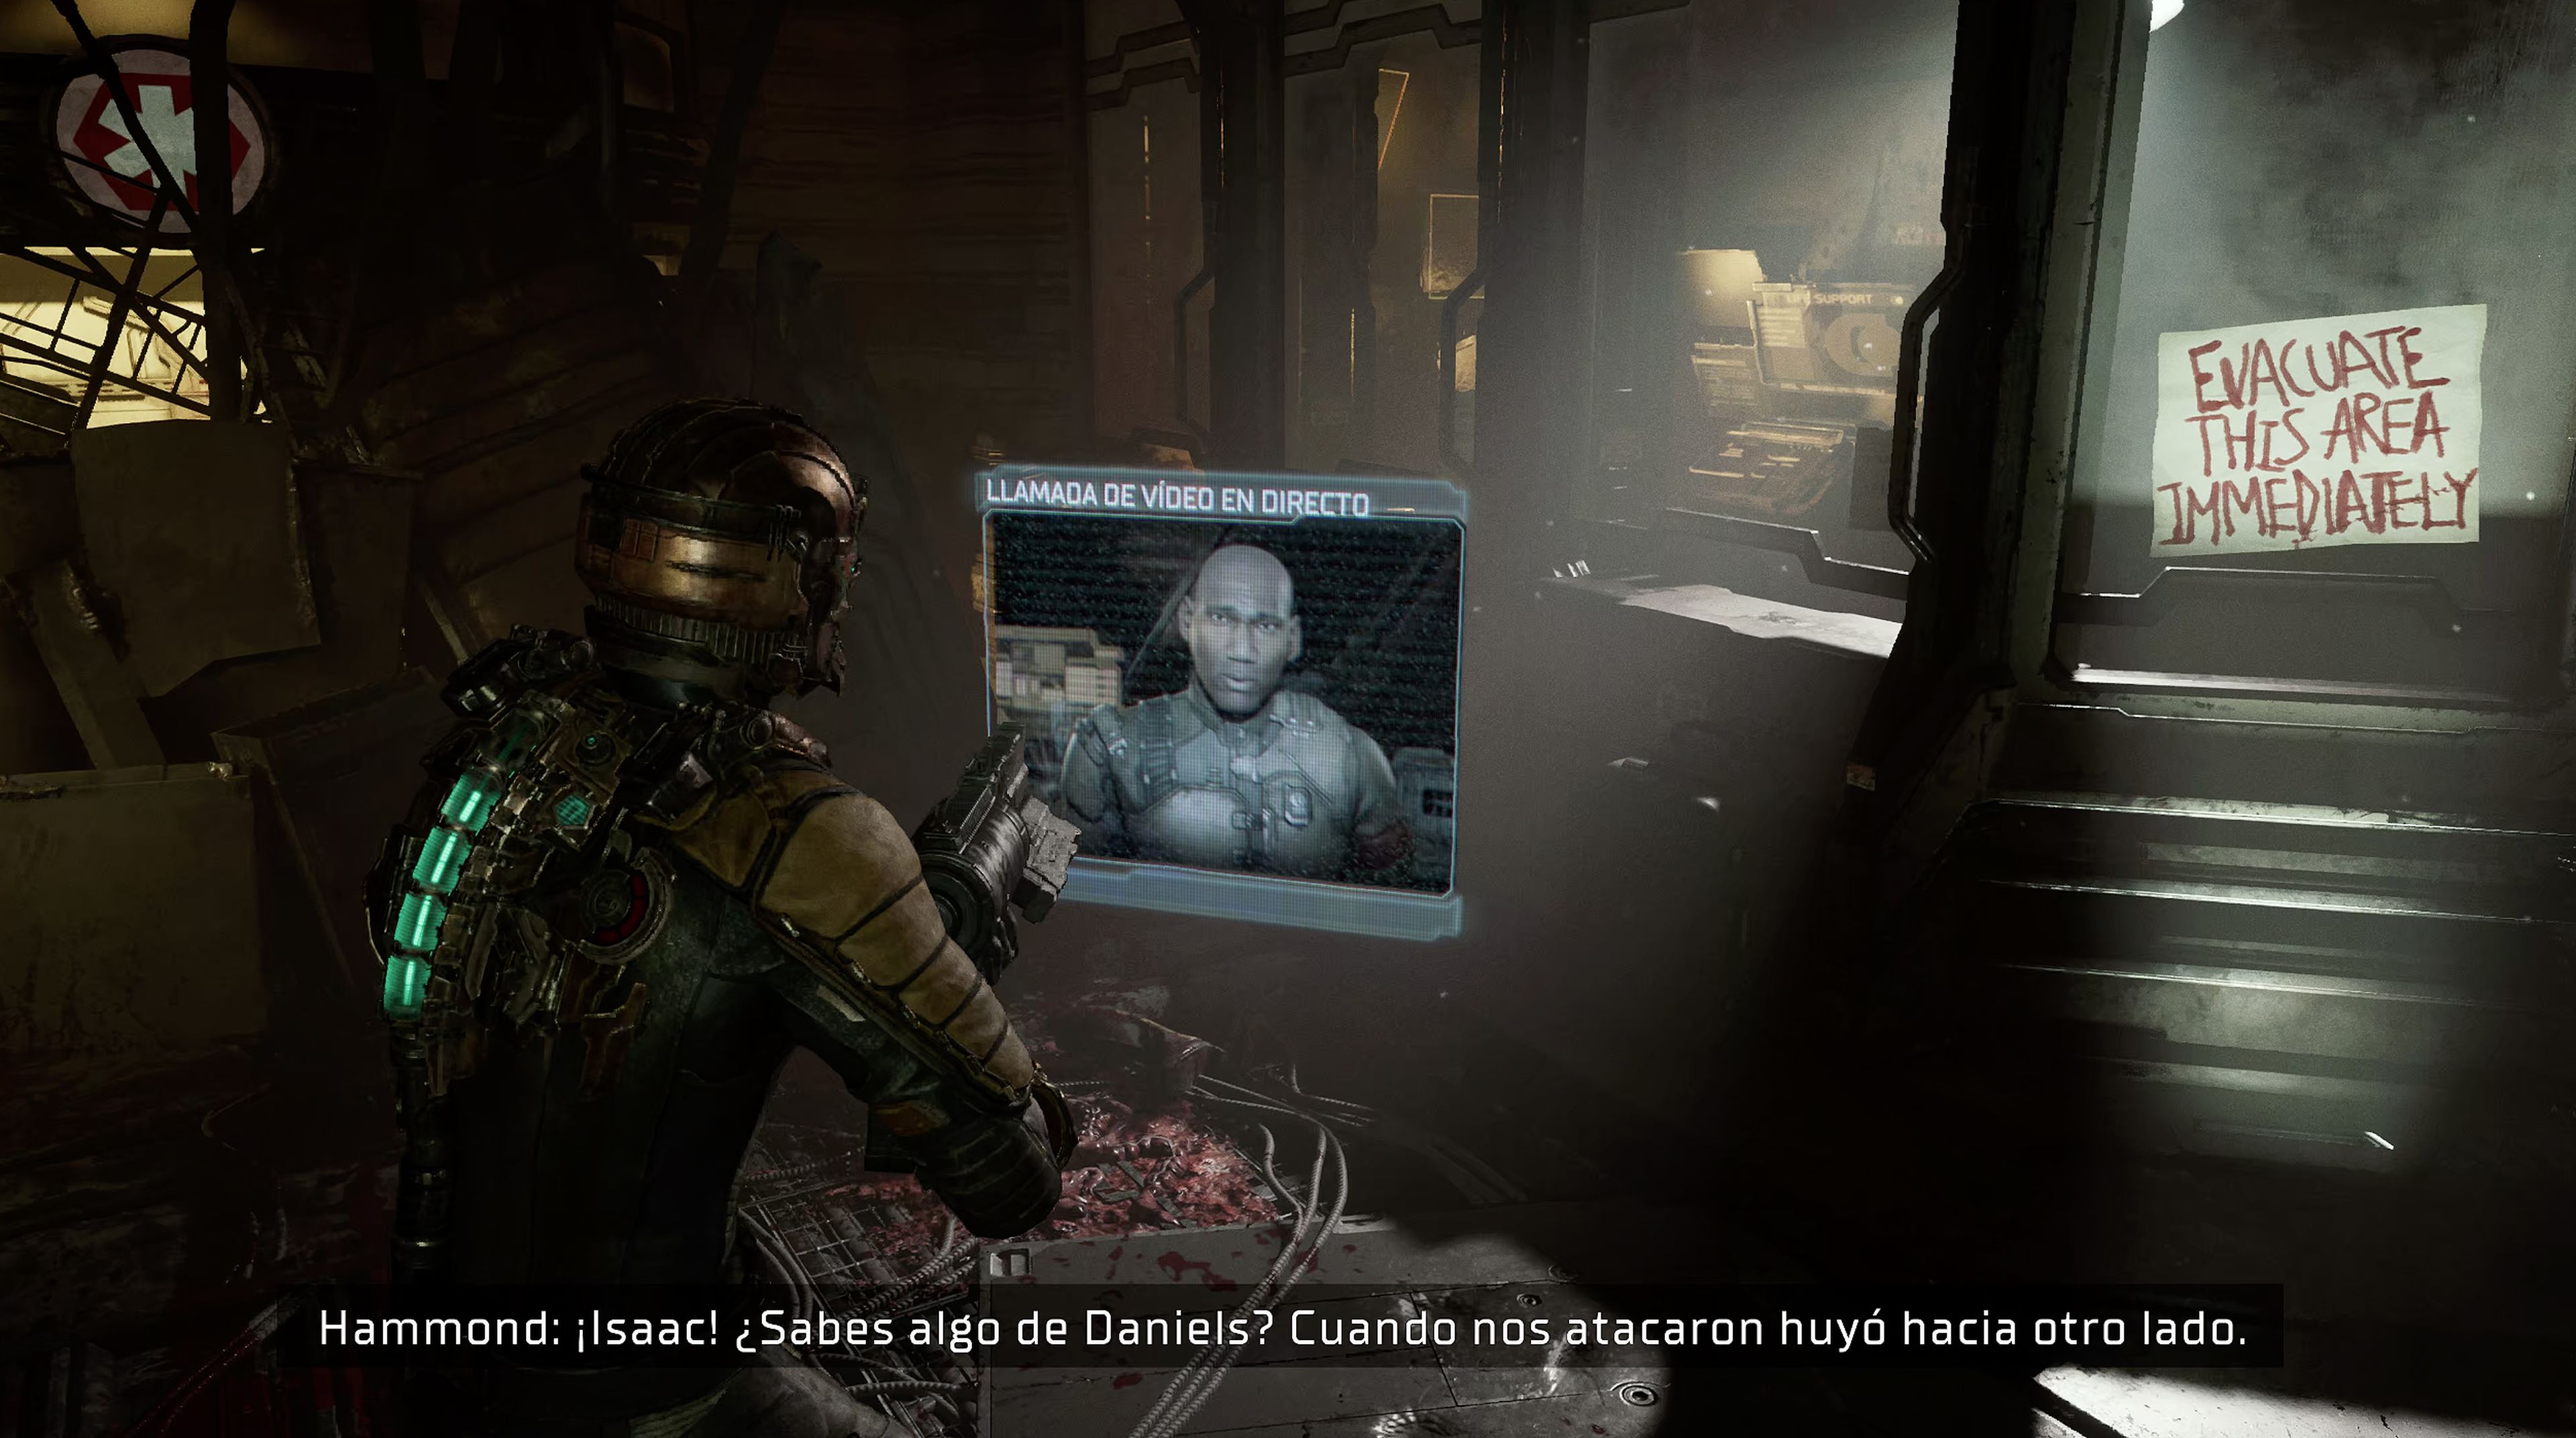  Dead Space - PlayStation 5 : Electronic Arts: Videojuegos